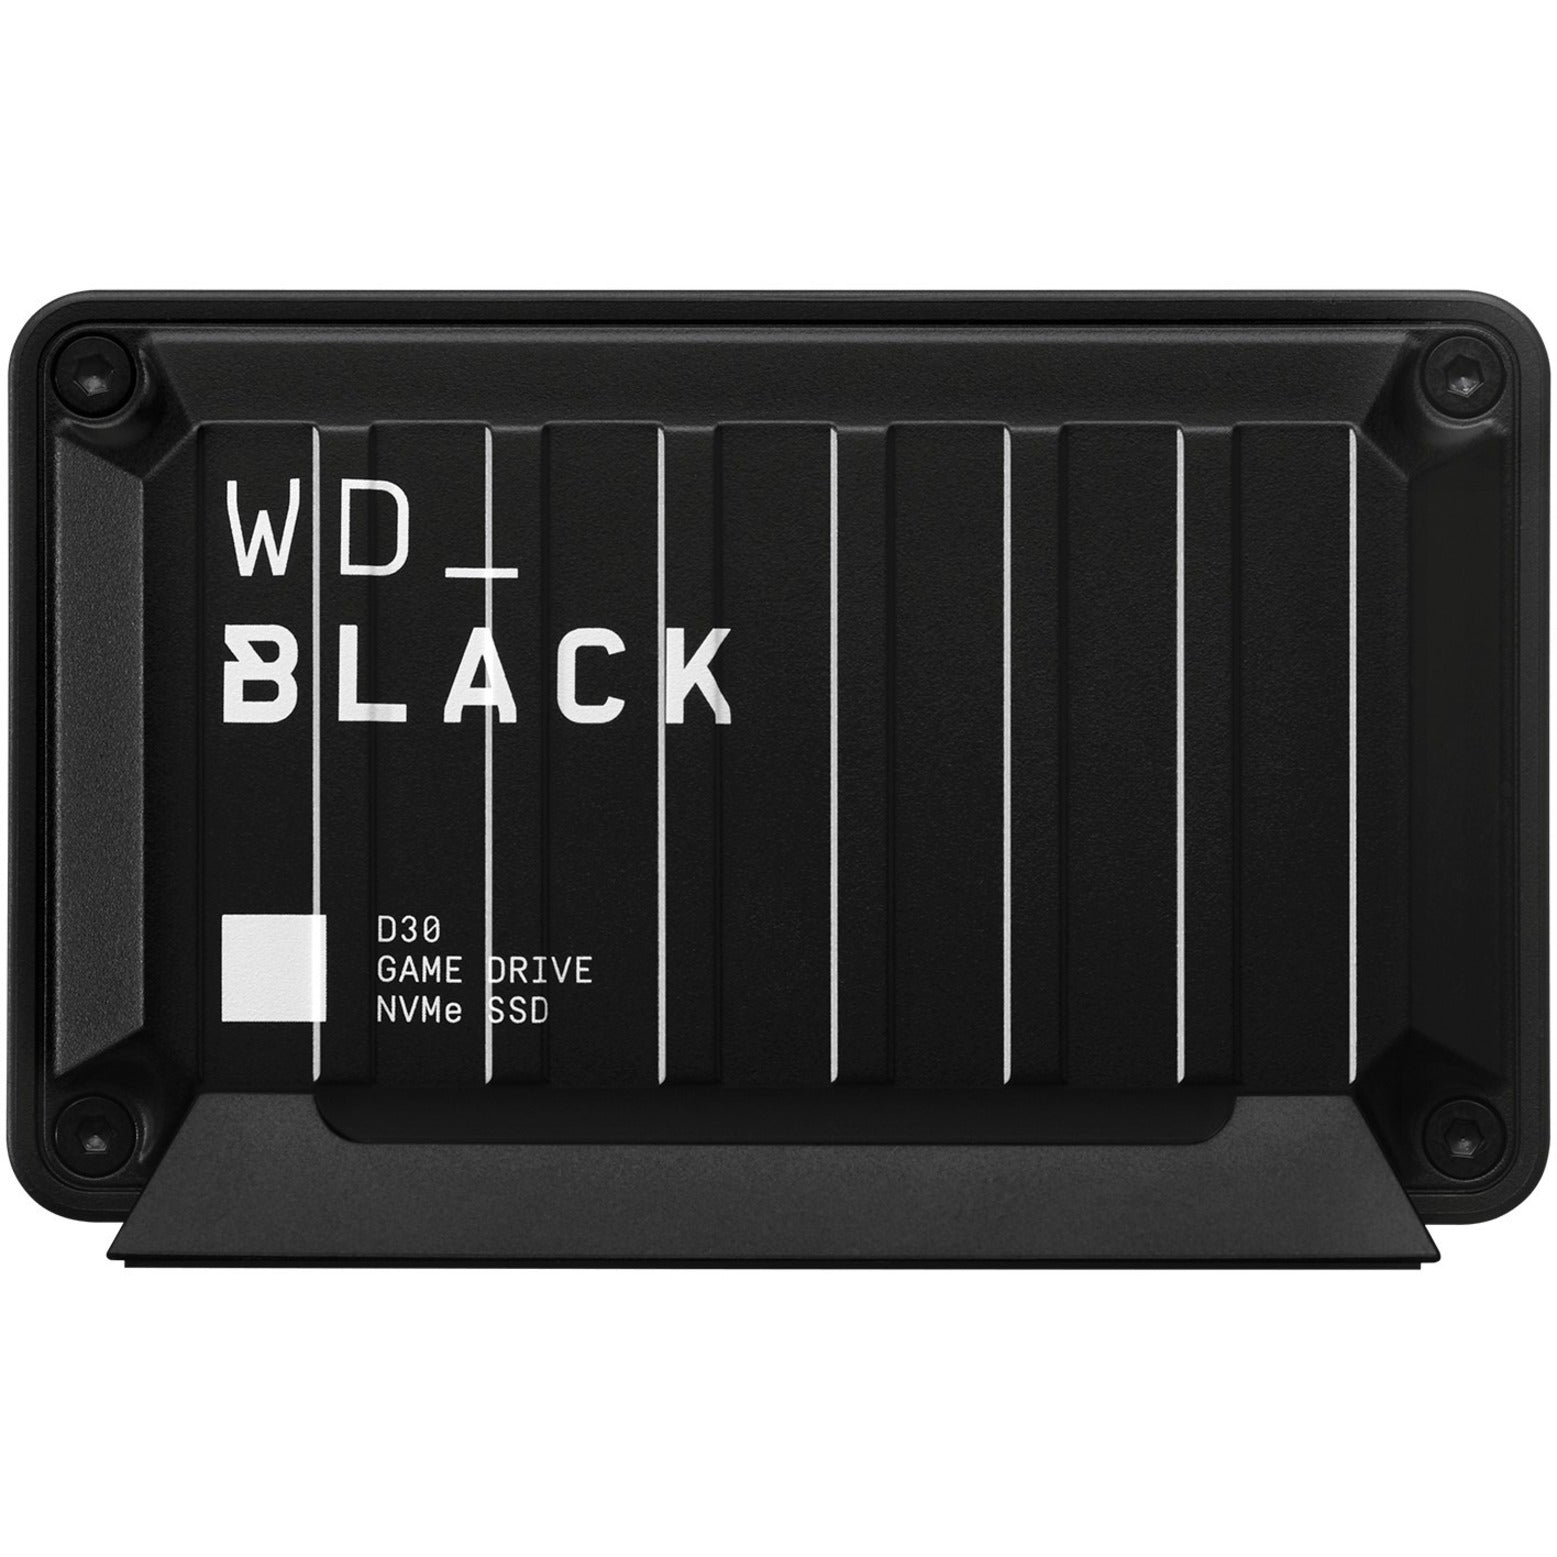 WD WDBATL0020BBK-WESN Black D30 Game Drive SSD, 2TB Portable Solid State Drive - Maximum Read Transfer Rate 900 MB/s